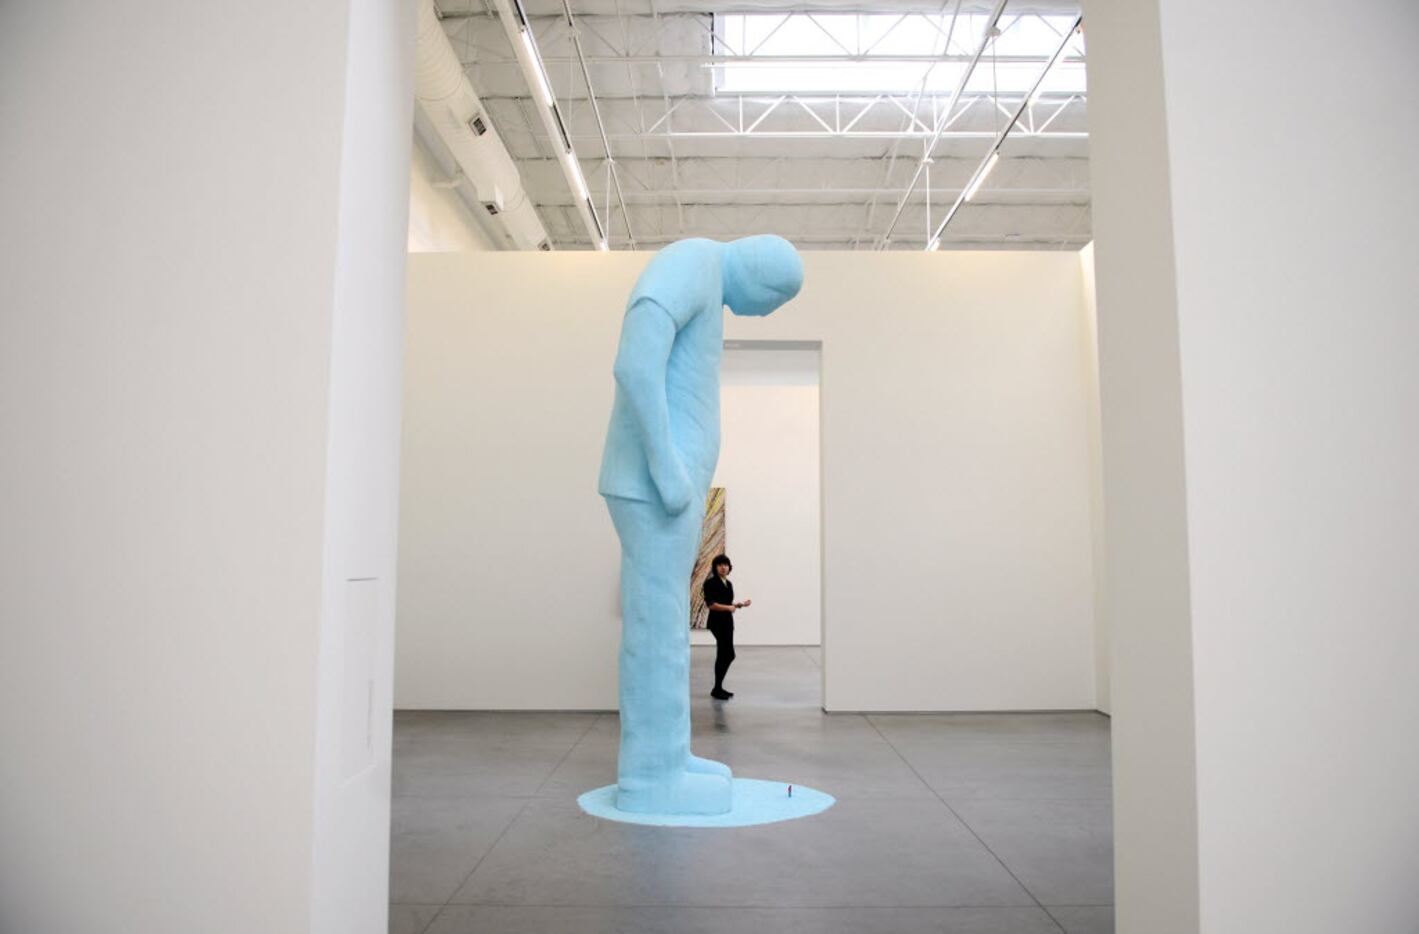 Sierra Sanchez, a museum guard, looks after an untitled sculpture by Tom Friedman during a...